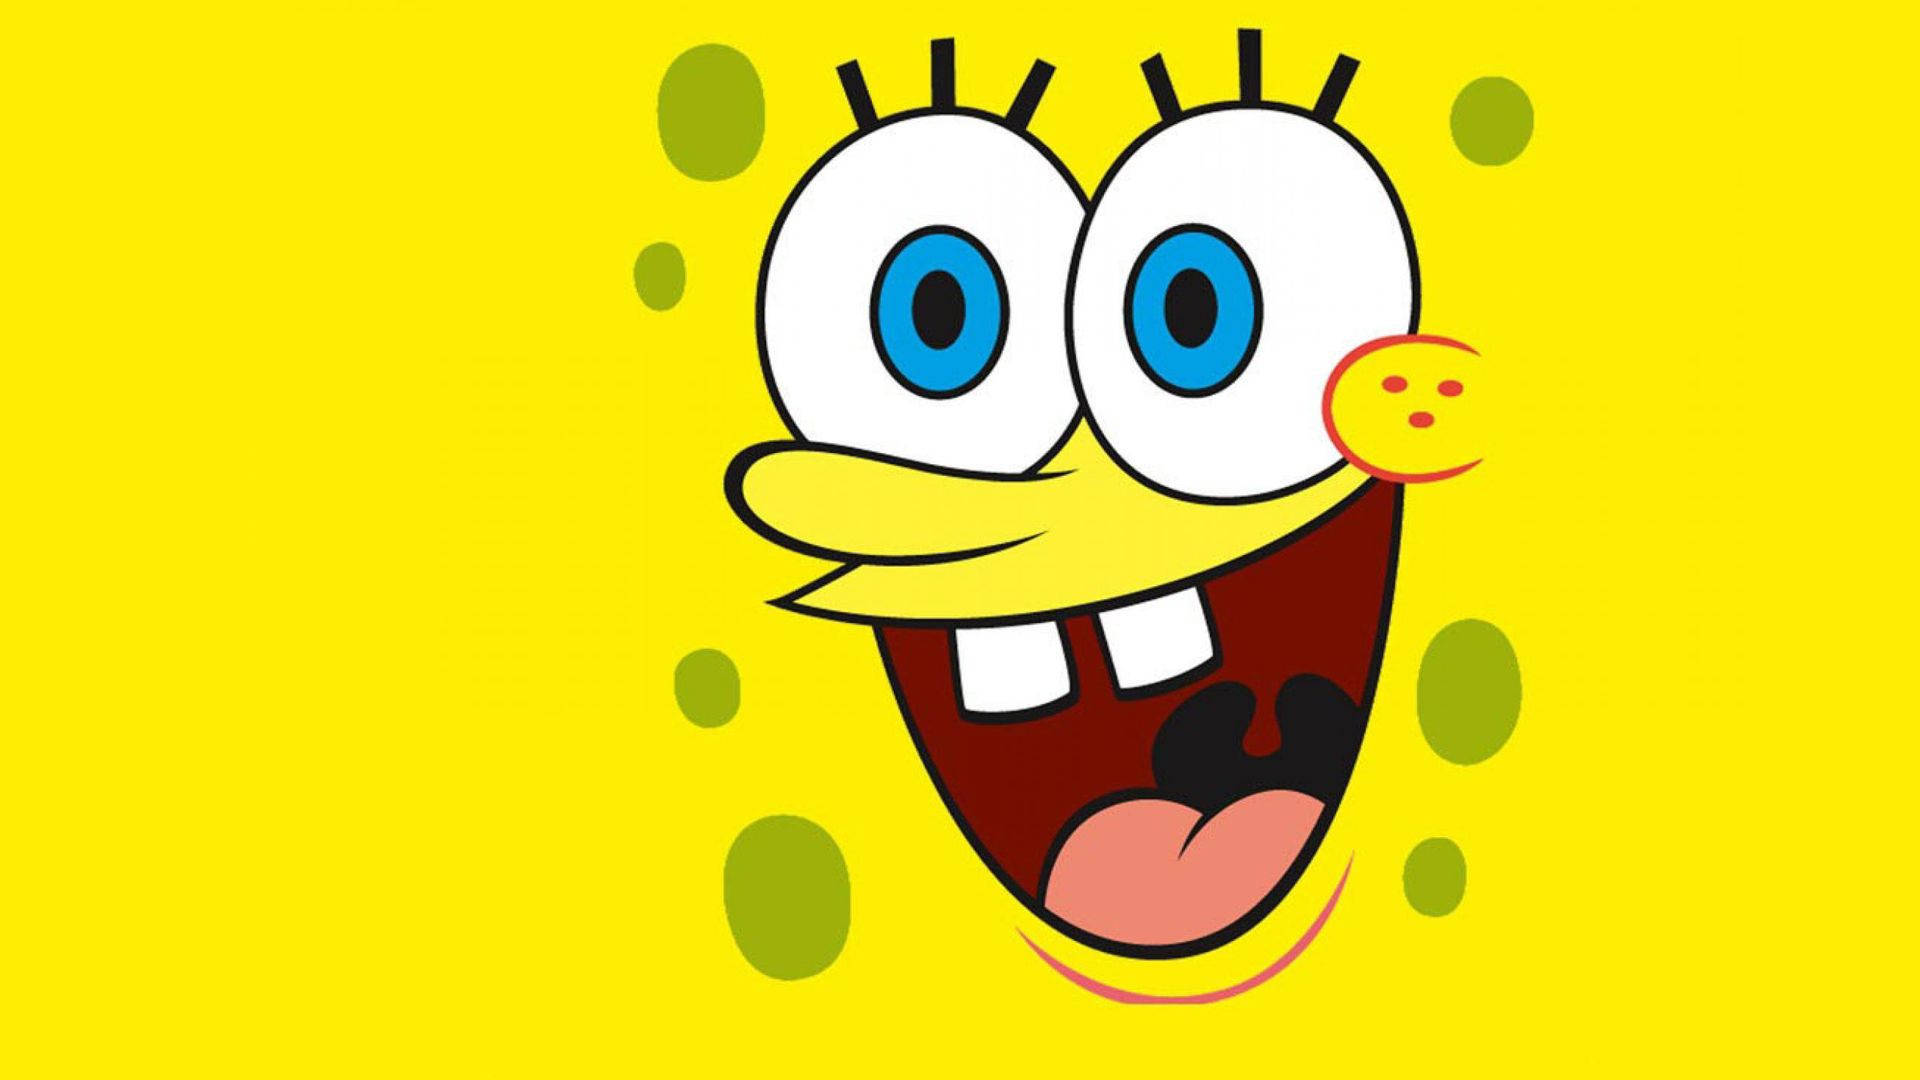 Jumping with Joy - Spongebob Squarepants Wallpaper